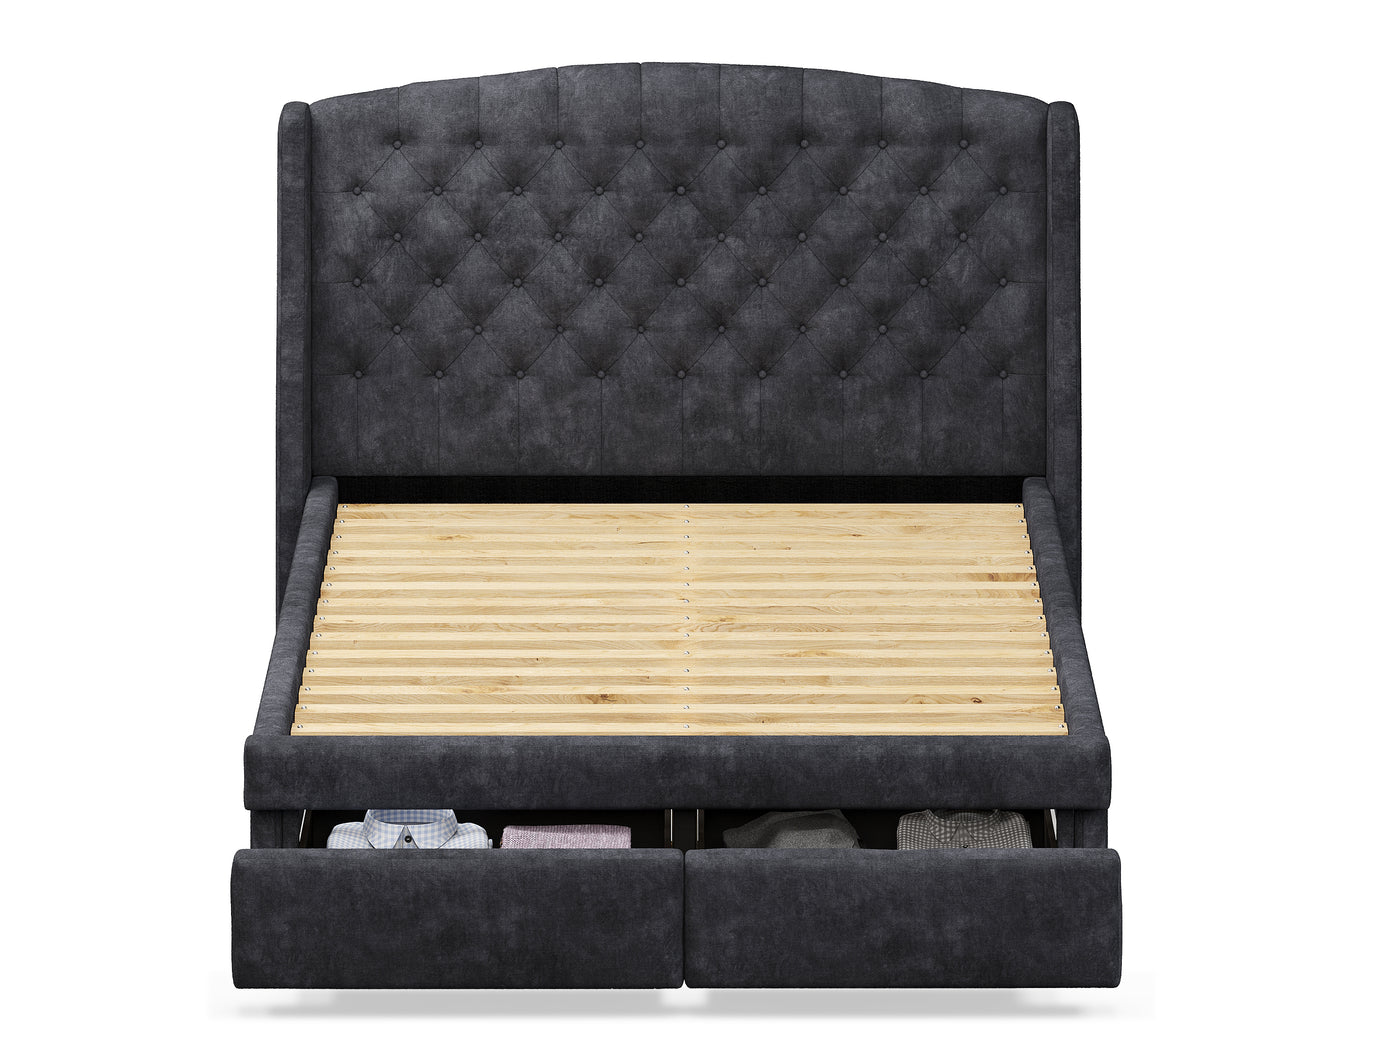 Warner Queen Size 2 Drawer Storage Bed Frame (Licorice Polyester)